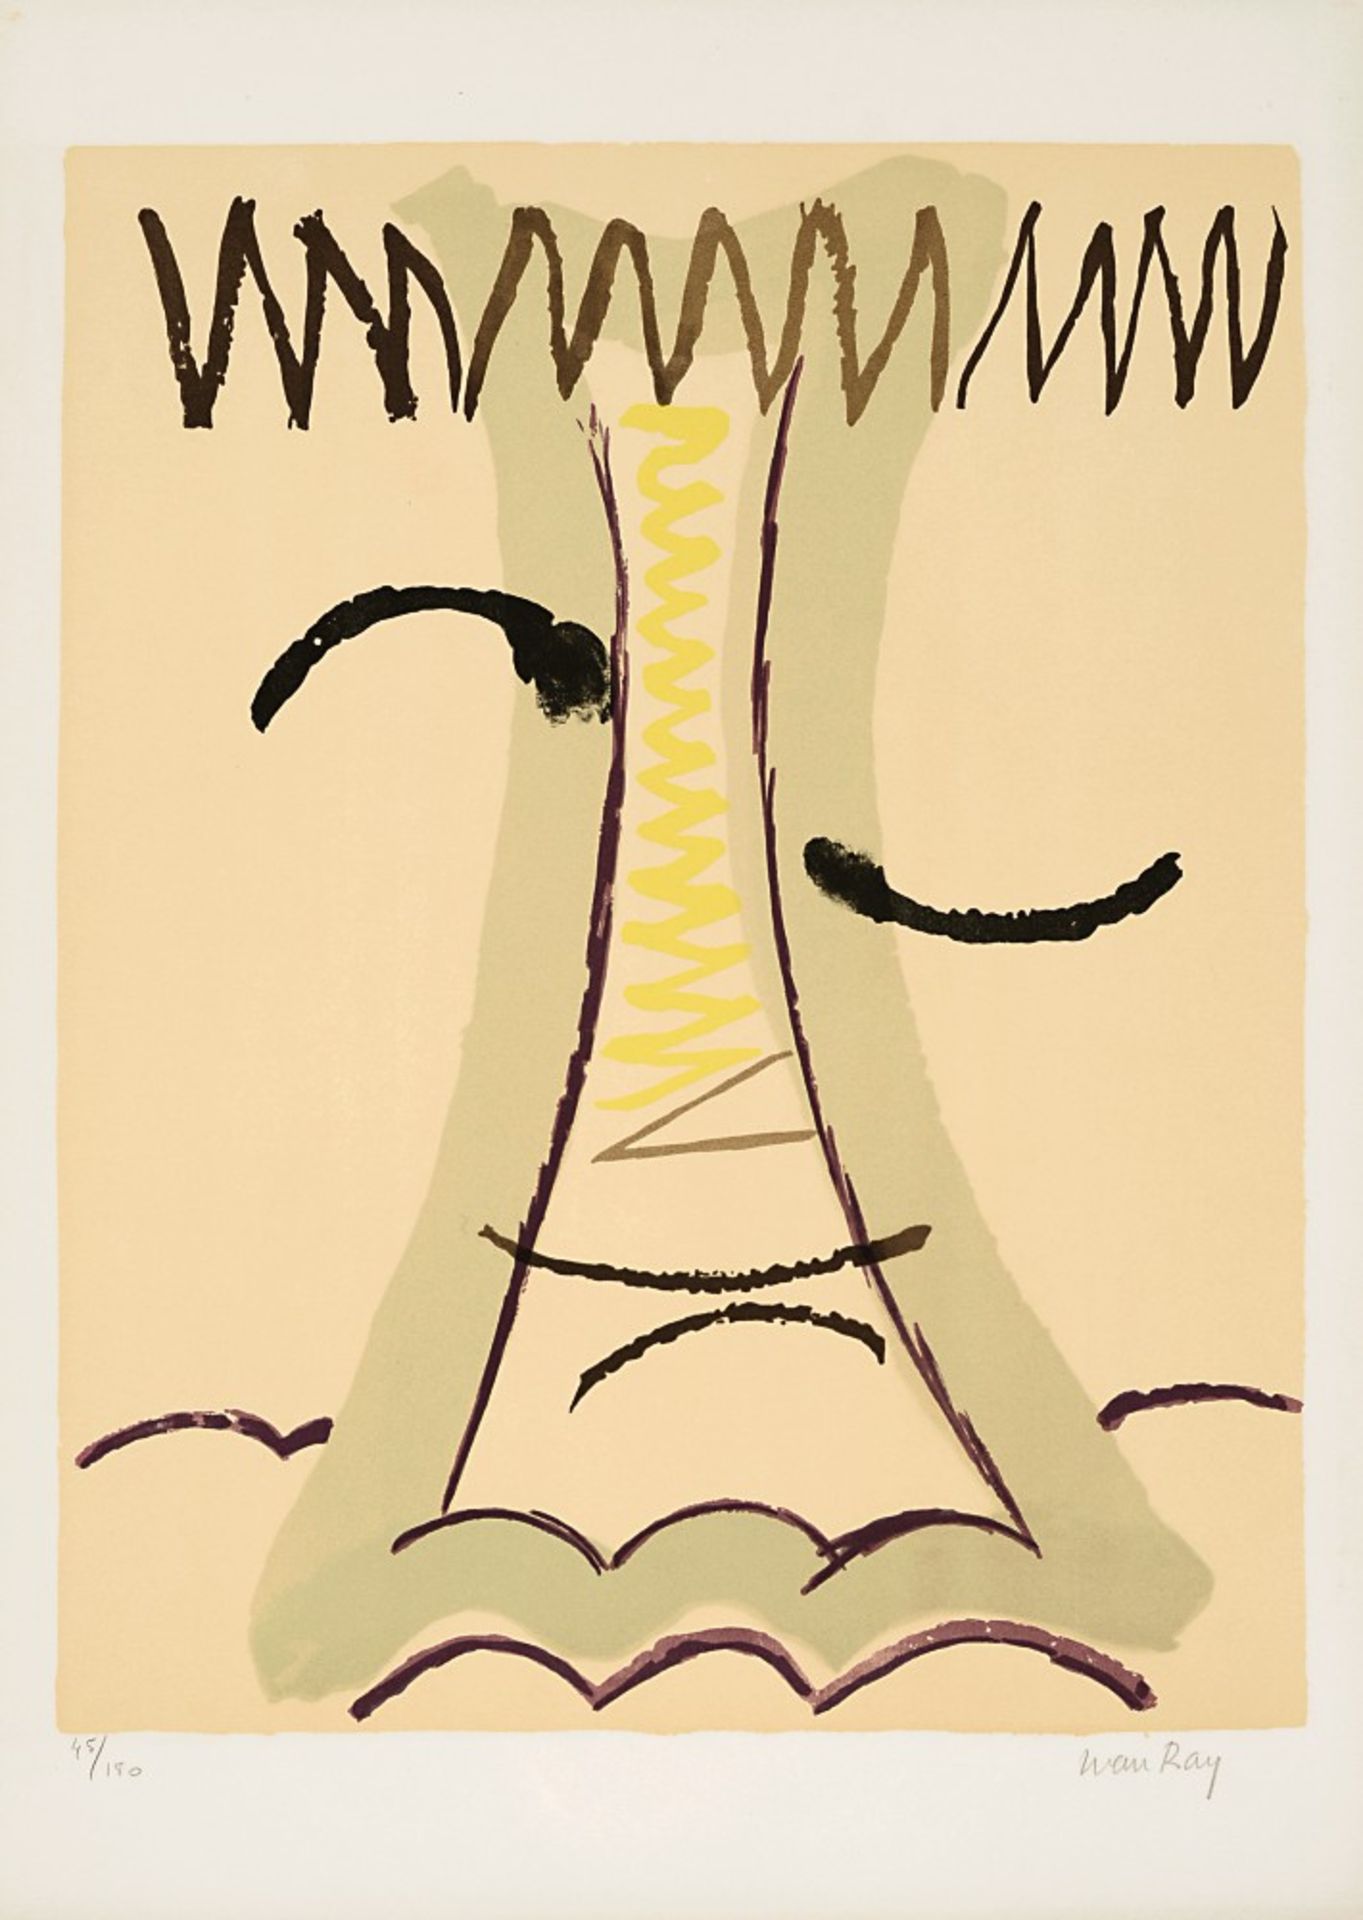 Man Ray (Emmanuel Radnitzky)1890 Philadelphia - 1976 Parisaus: L'Origine de l'Espace